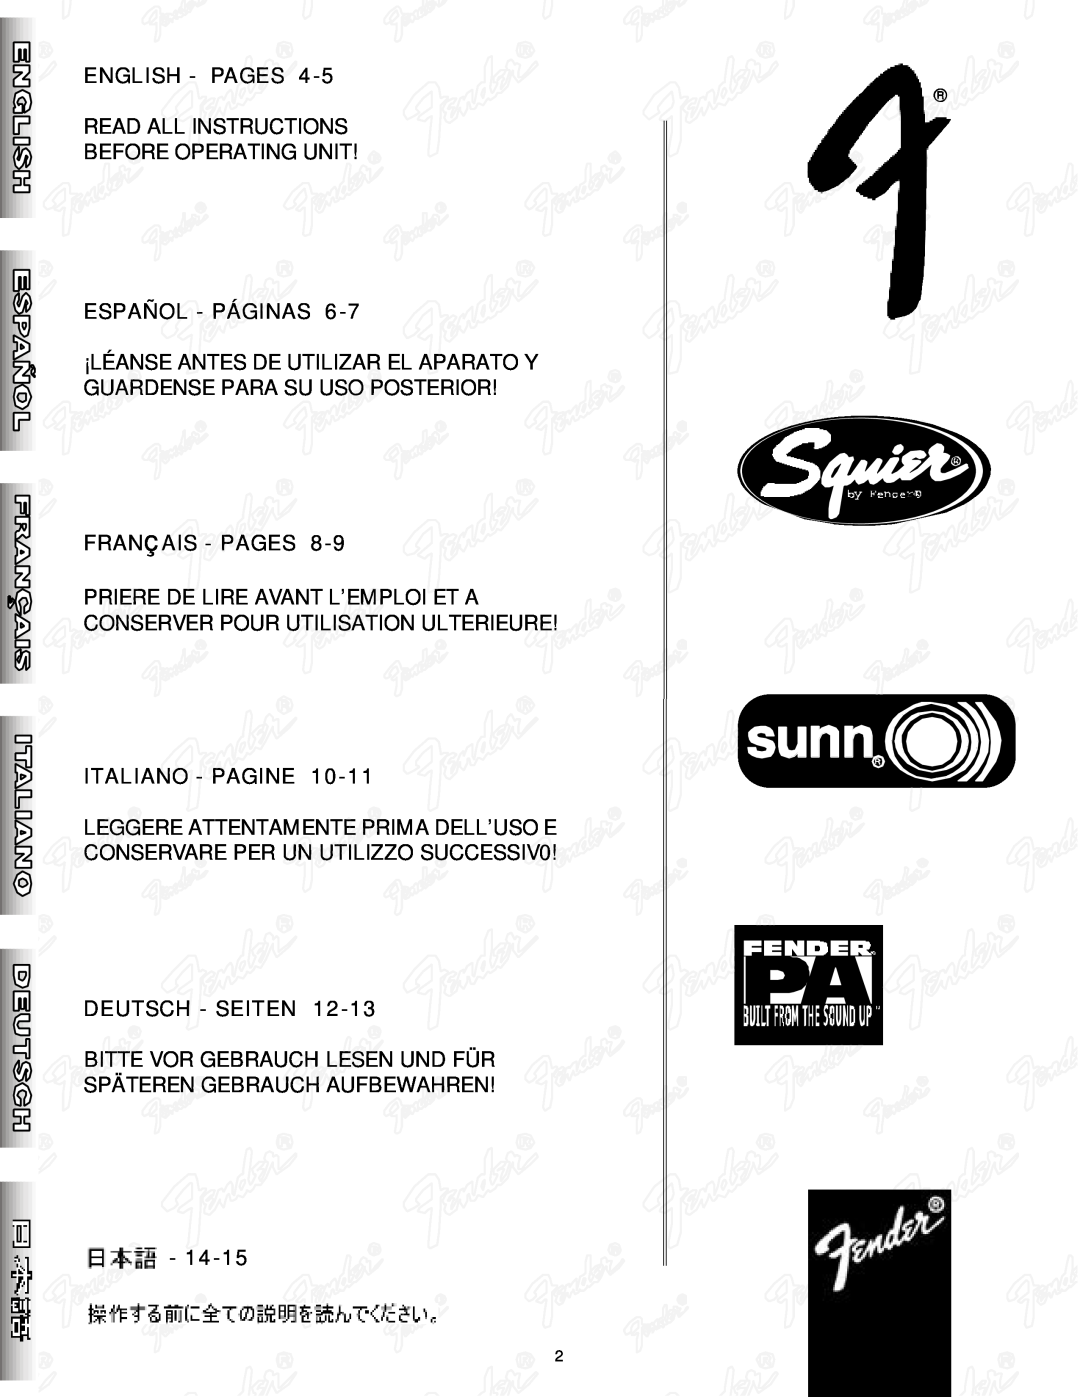 Fender 1000 manual English - Pages, Español - Páginas, FRANçAIS - PAGES, Italiano - Pagine, Deutsch - Seiten, 14-15 